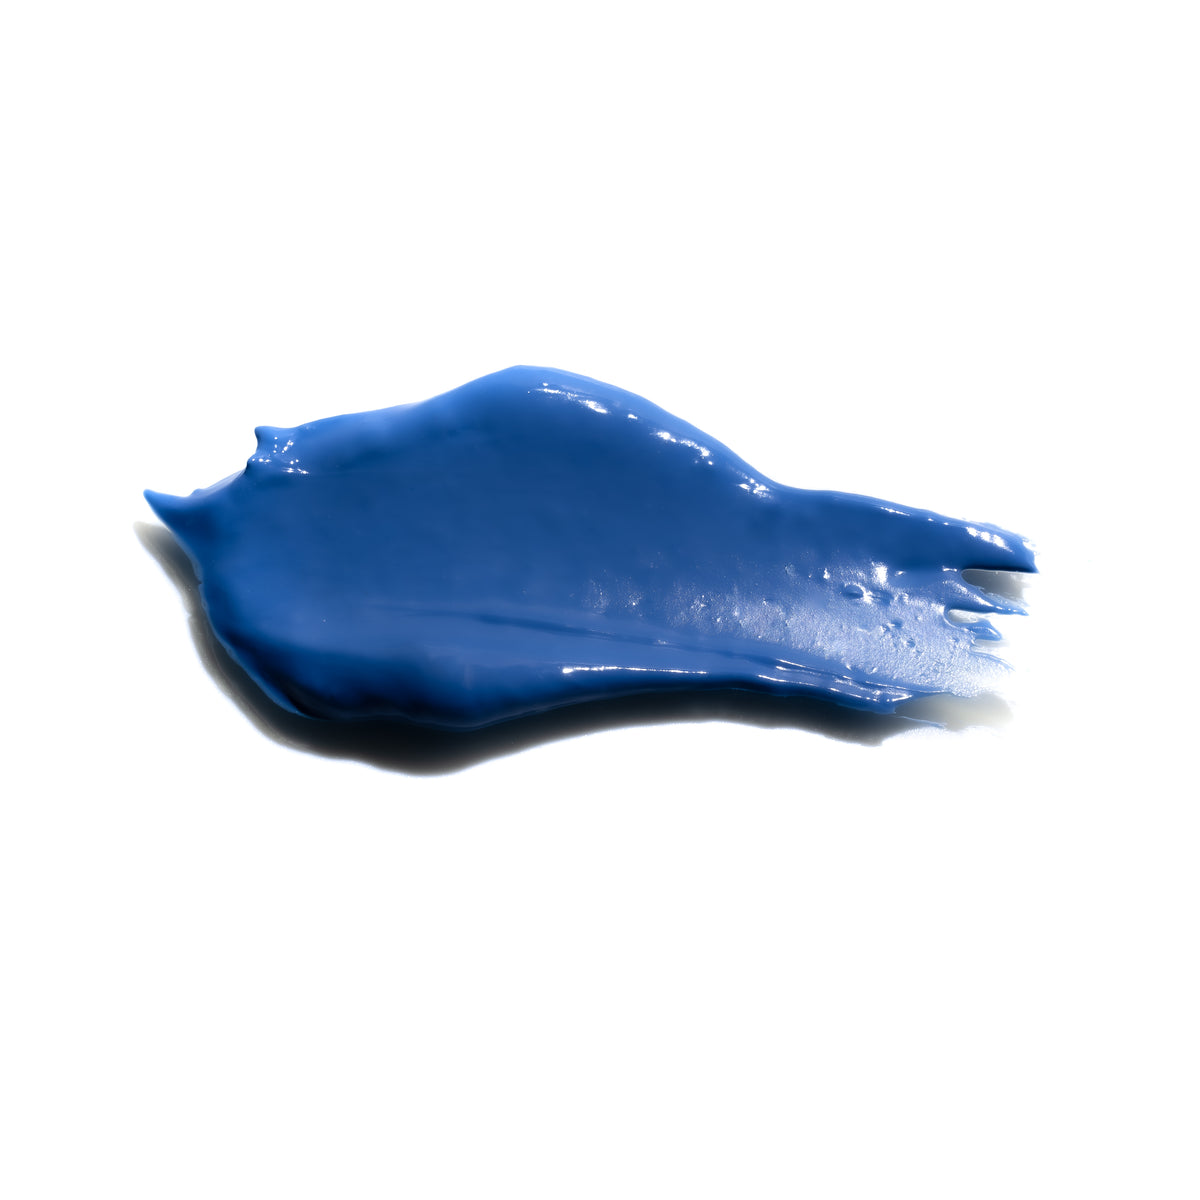 LILFOX Blue Legume Hydra-Soothe Treatment